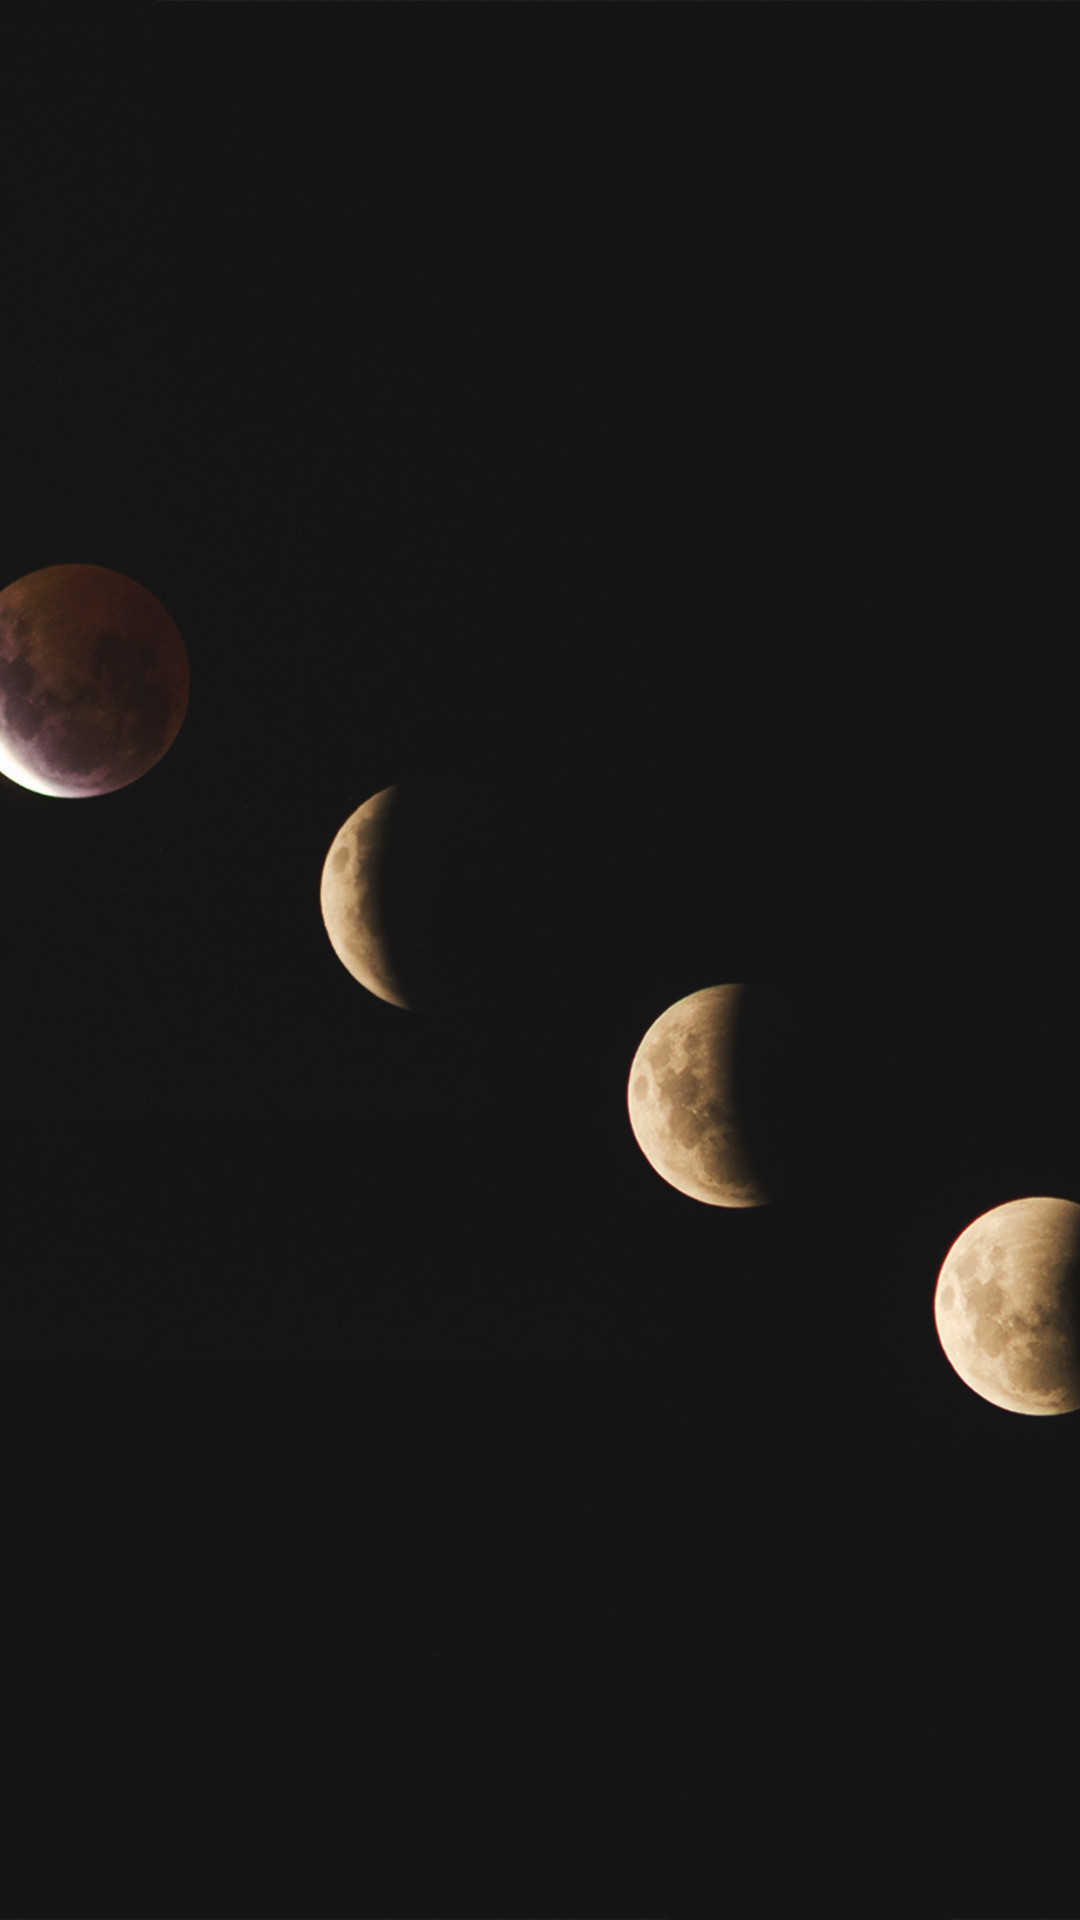 1080x1920 Bloody Moon iPhone Wallpaper